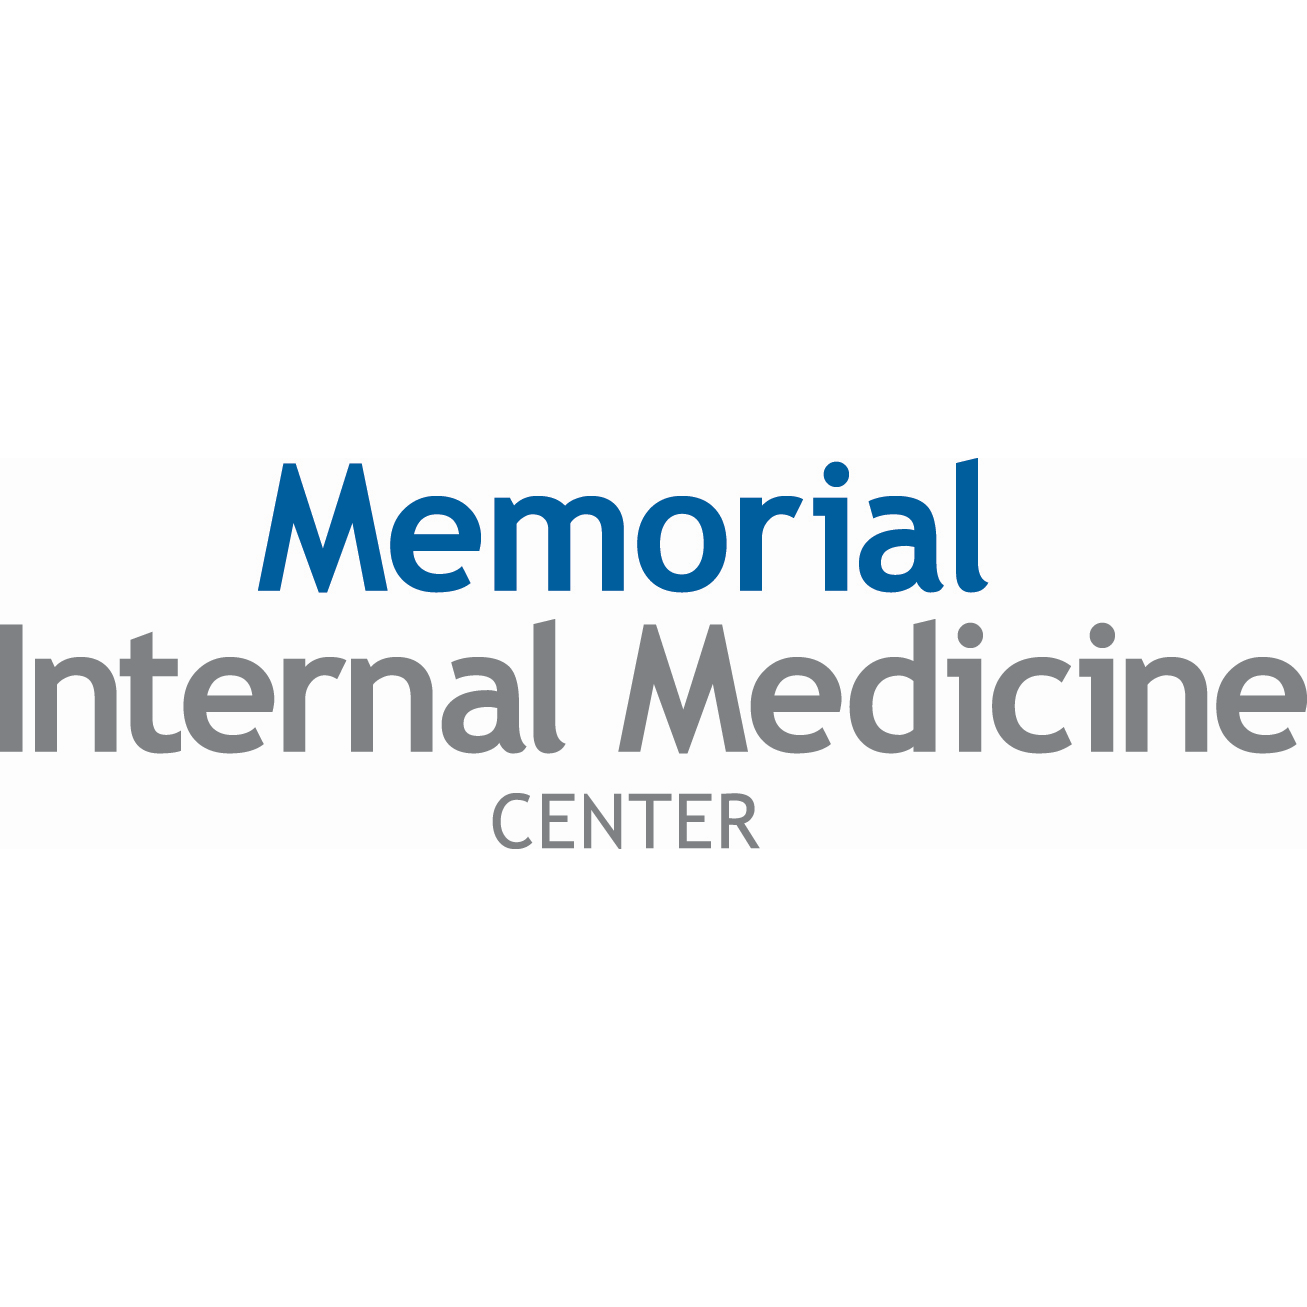 Memorial Internal Medicine